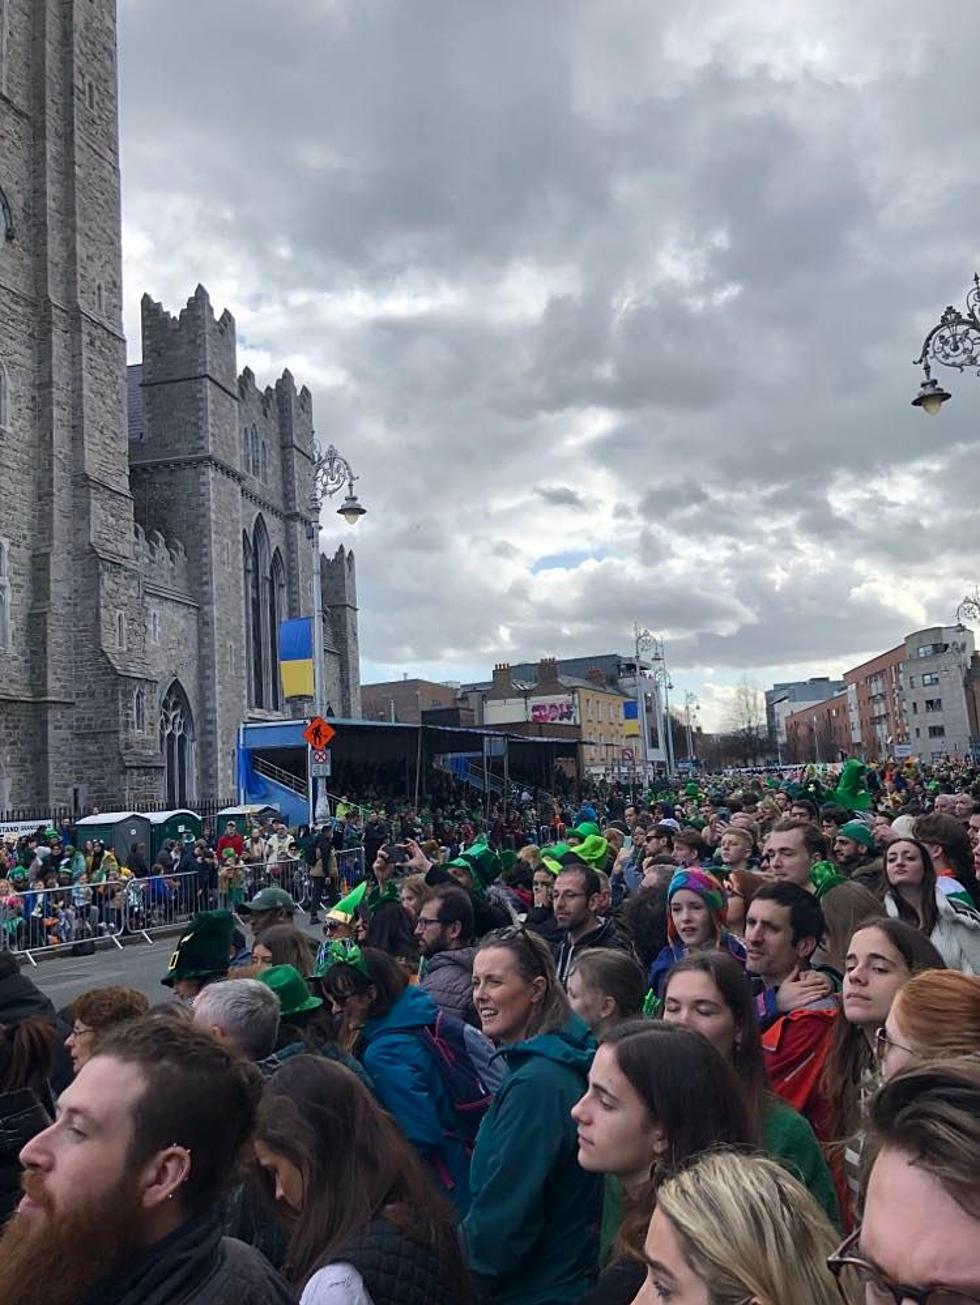 A North Dakota Radio Host's St. Patrick's Adventure in Ireland